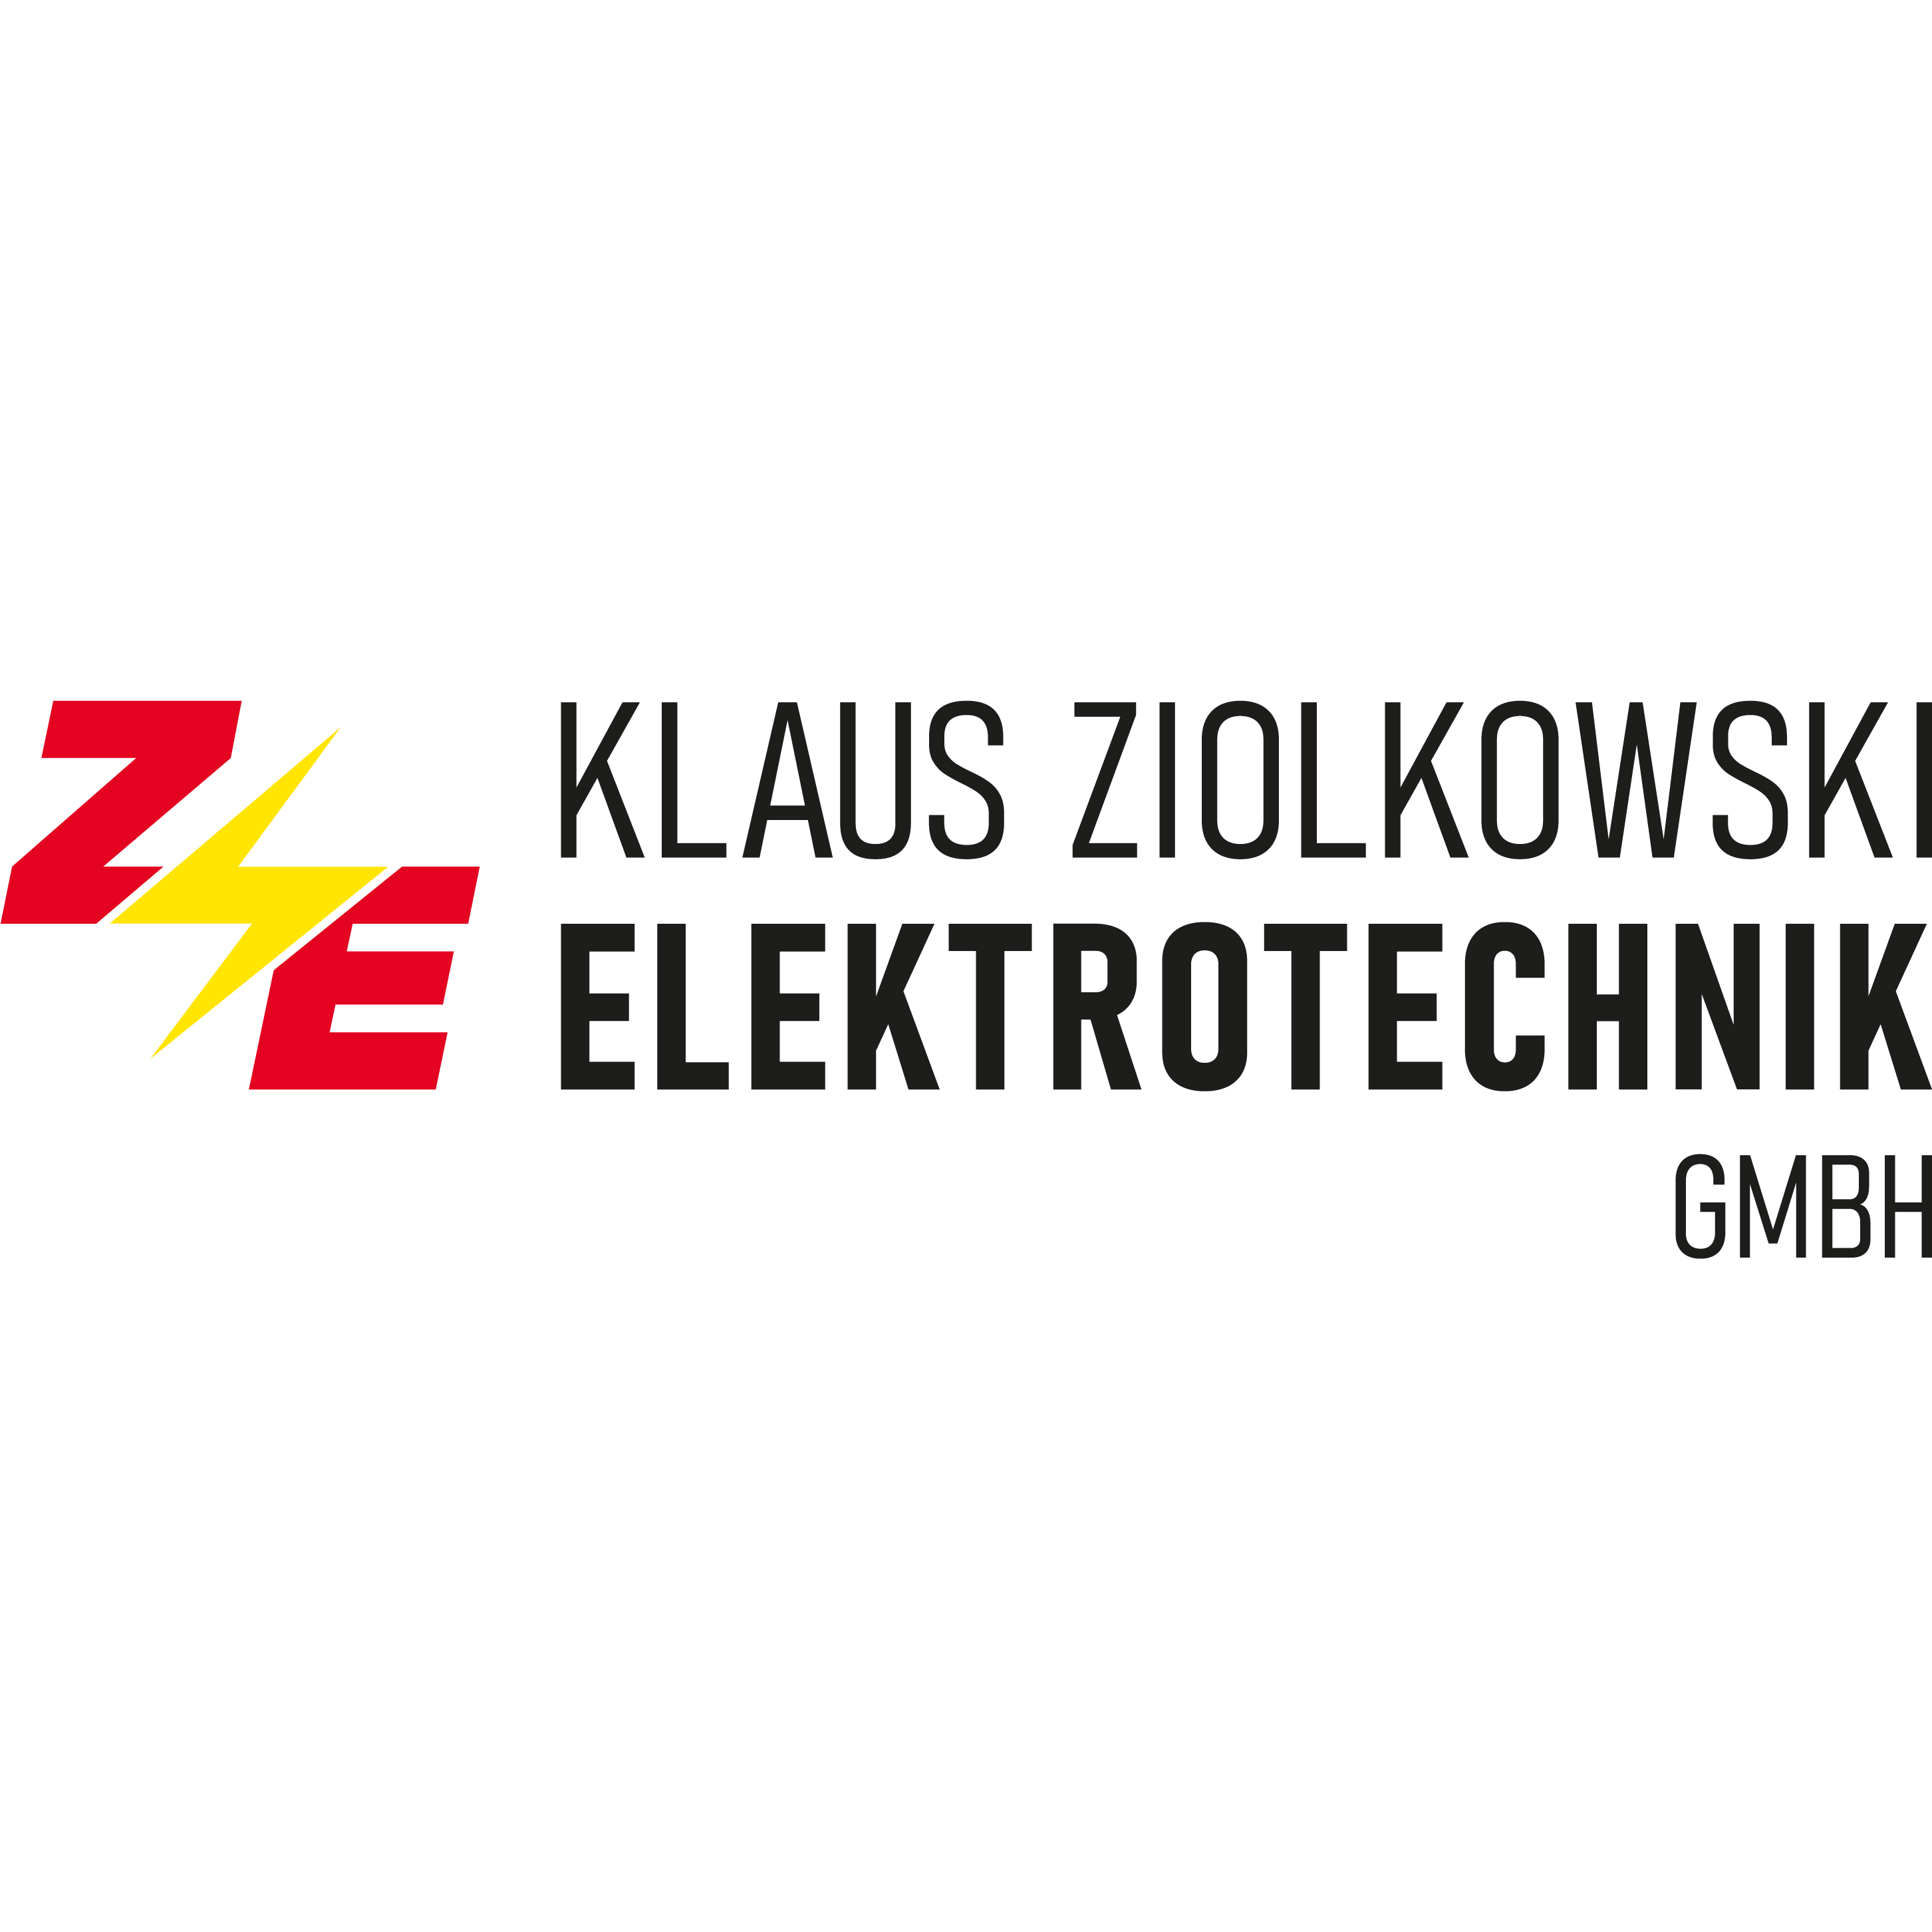 Klaus Ziolkowski Elektrotechnik GmbH  